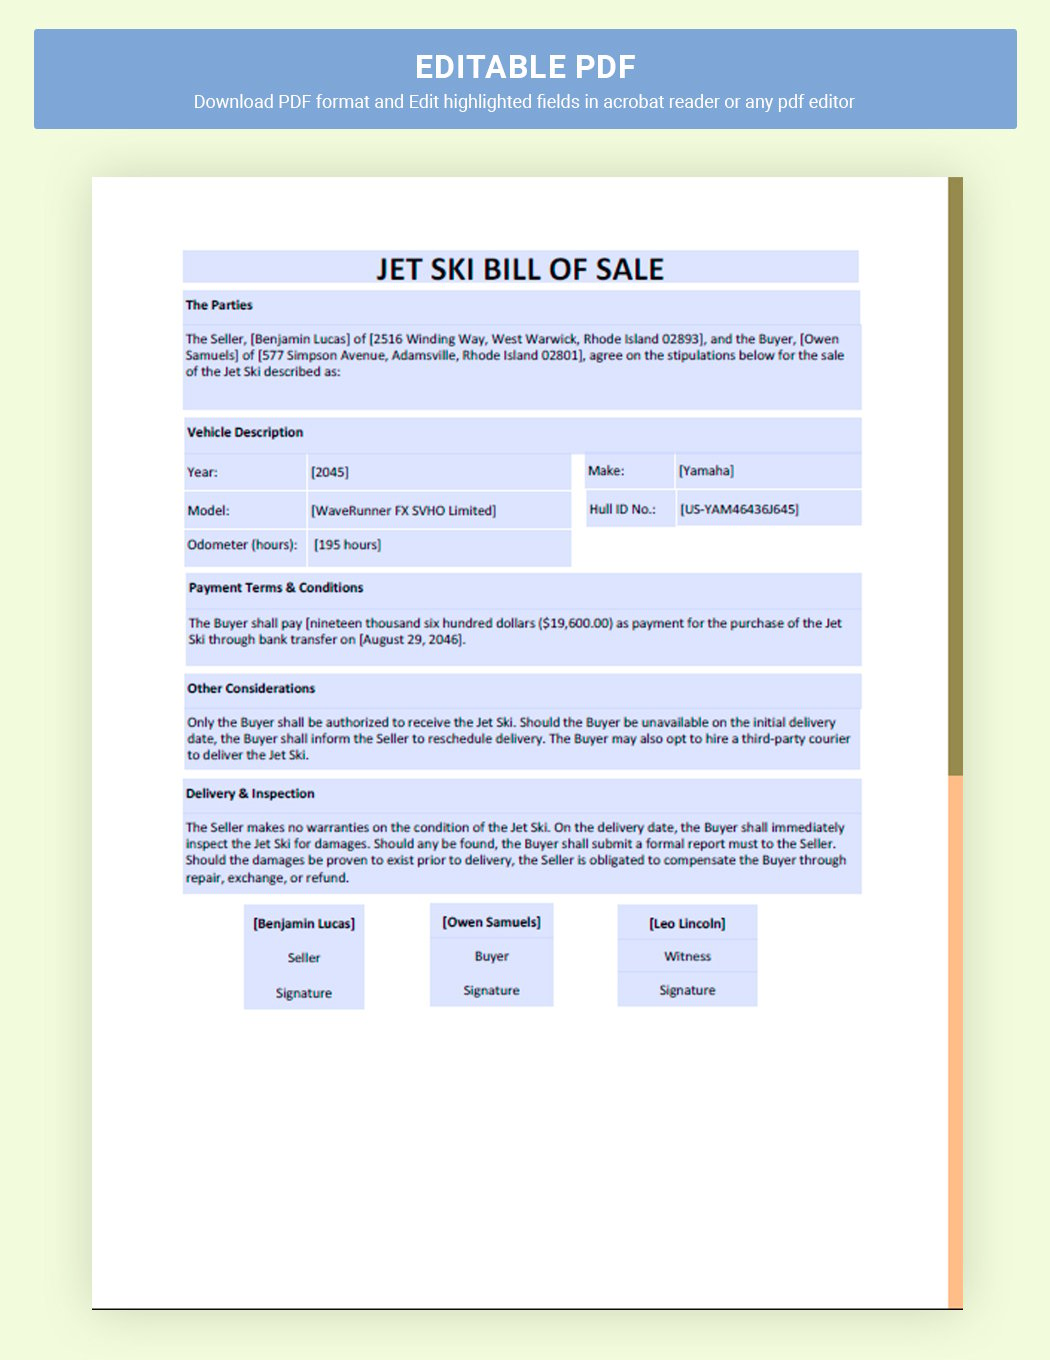 Jet Ski Bill Of Sale Template Download in Word, Google Docs, PDF